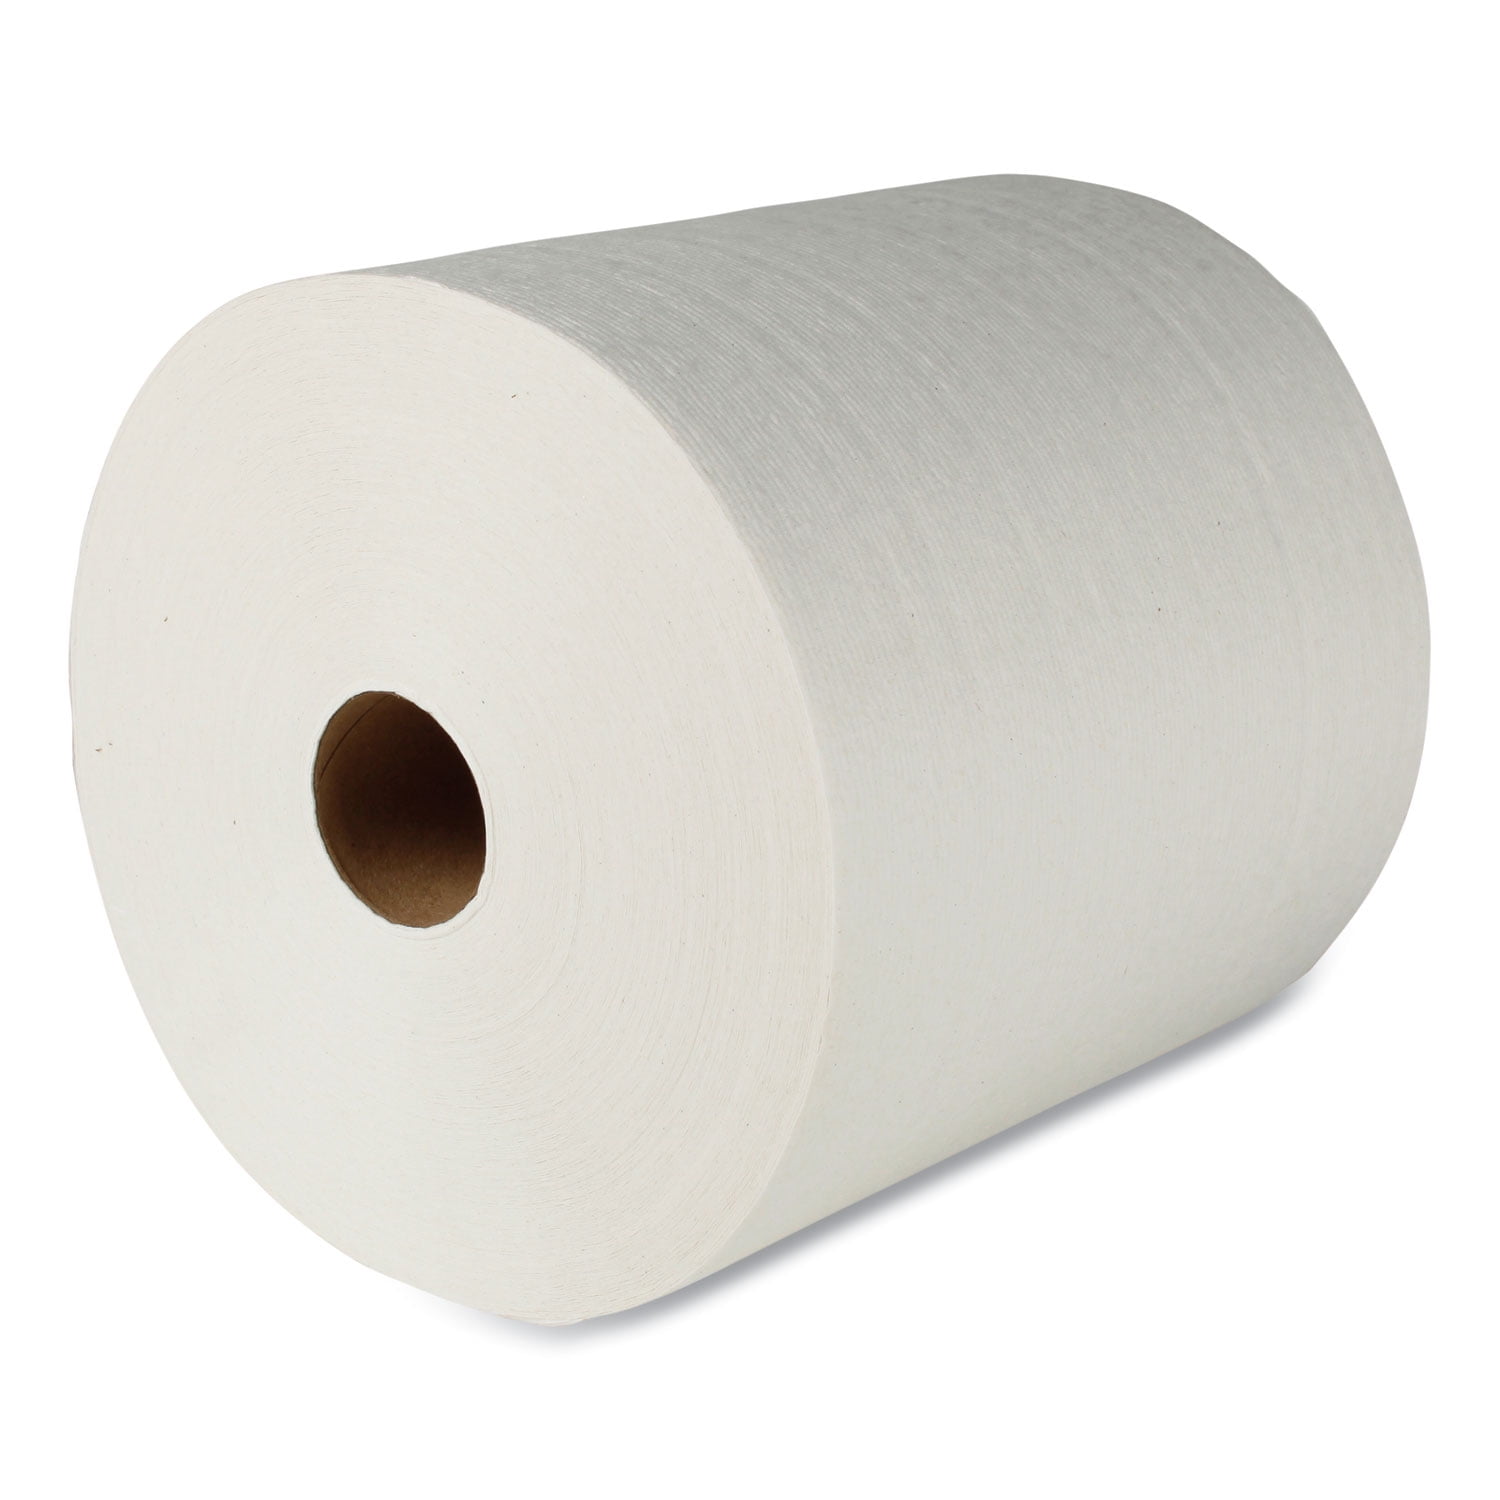 Kimberly Clark Professional Scott Essential Plus Hard Roll Towels Core dia White 